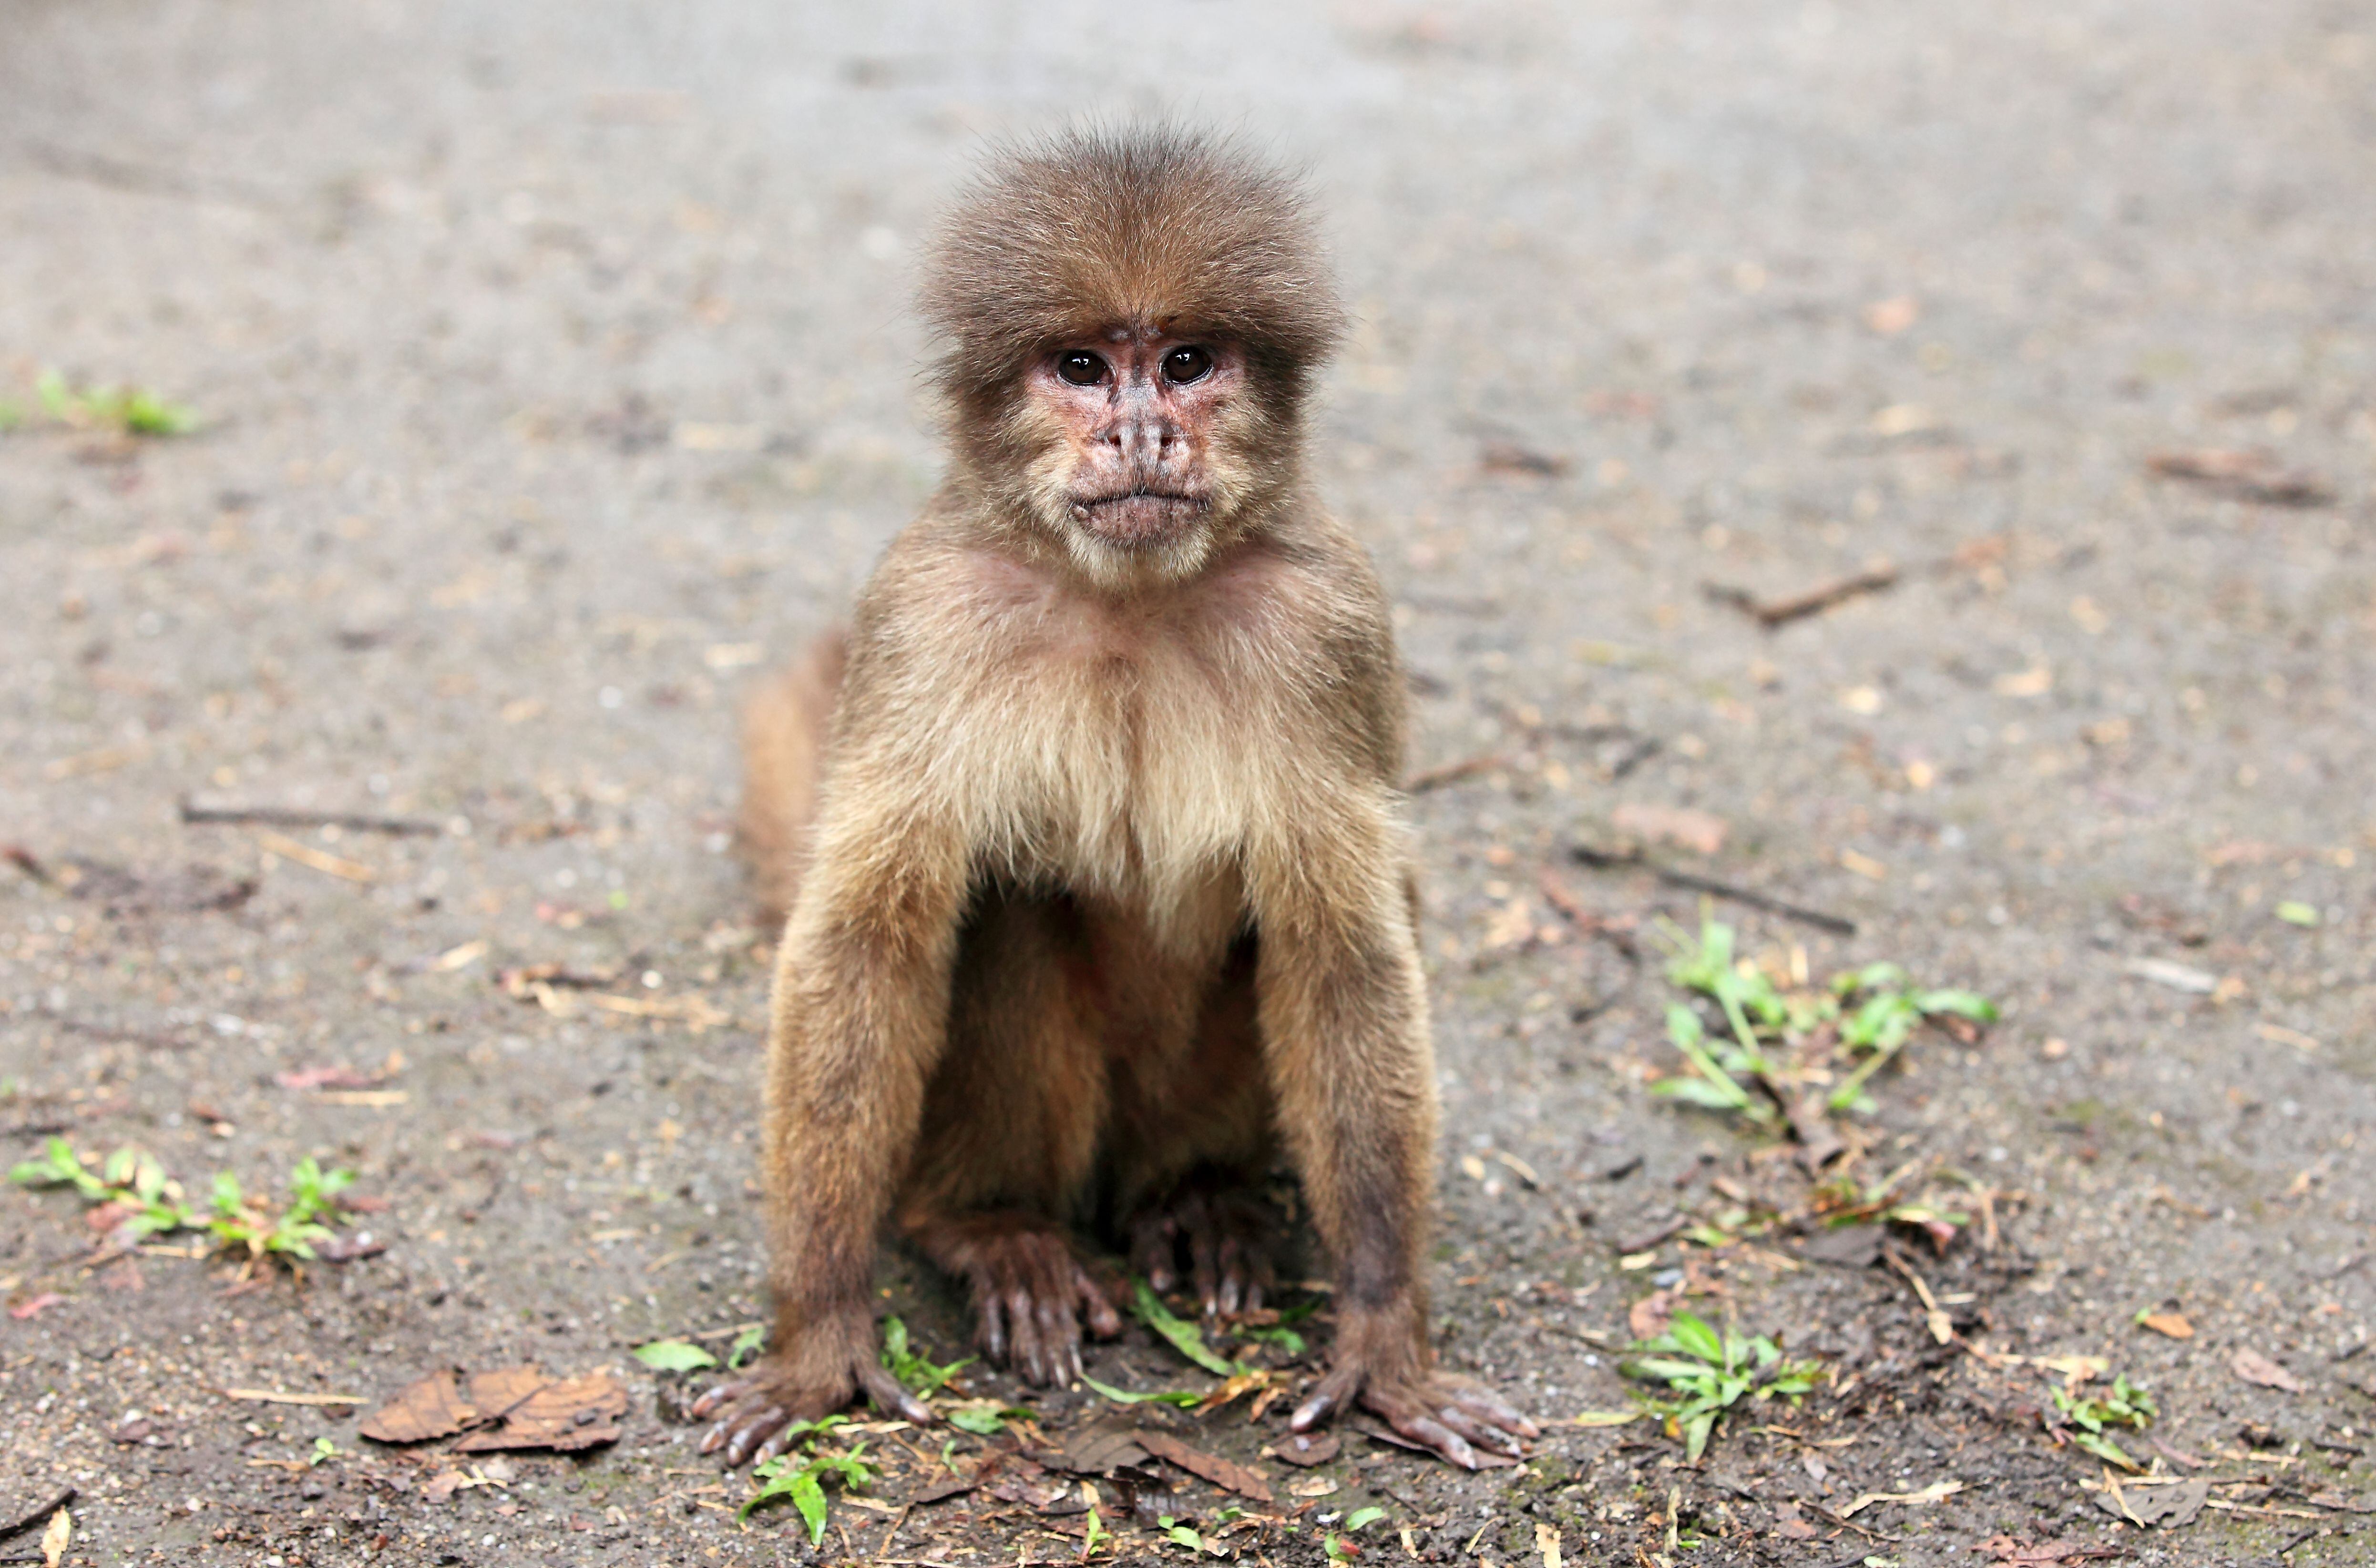 Capuchino ecuatoriano, es vulnerable porque se integra con facilidad a zonas intervenidas por humanos.